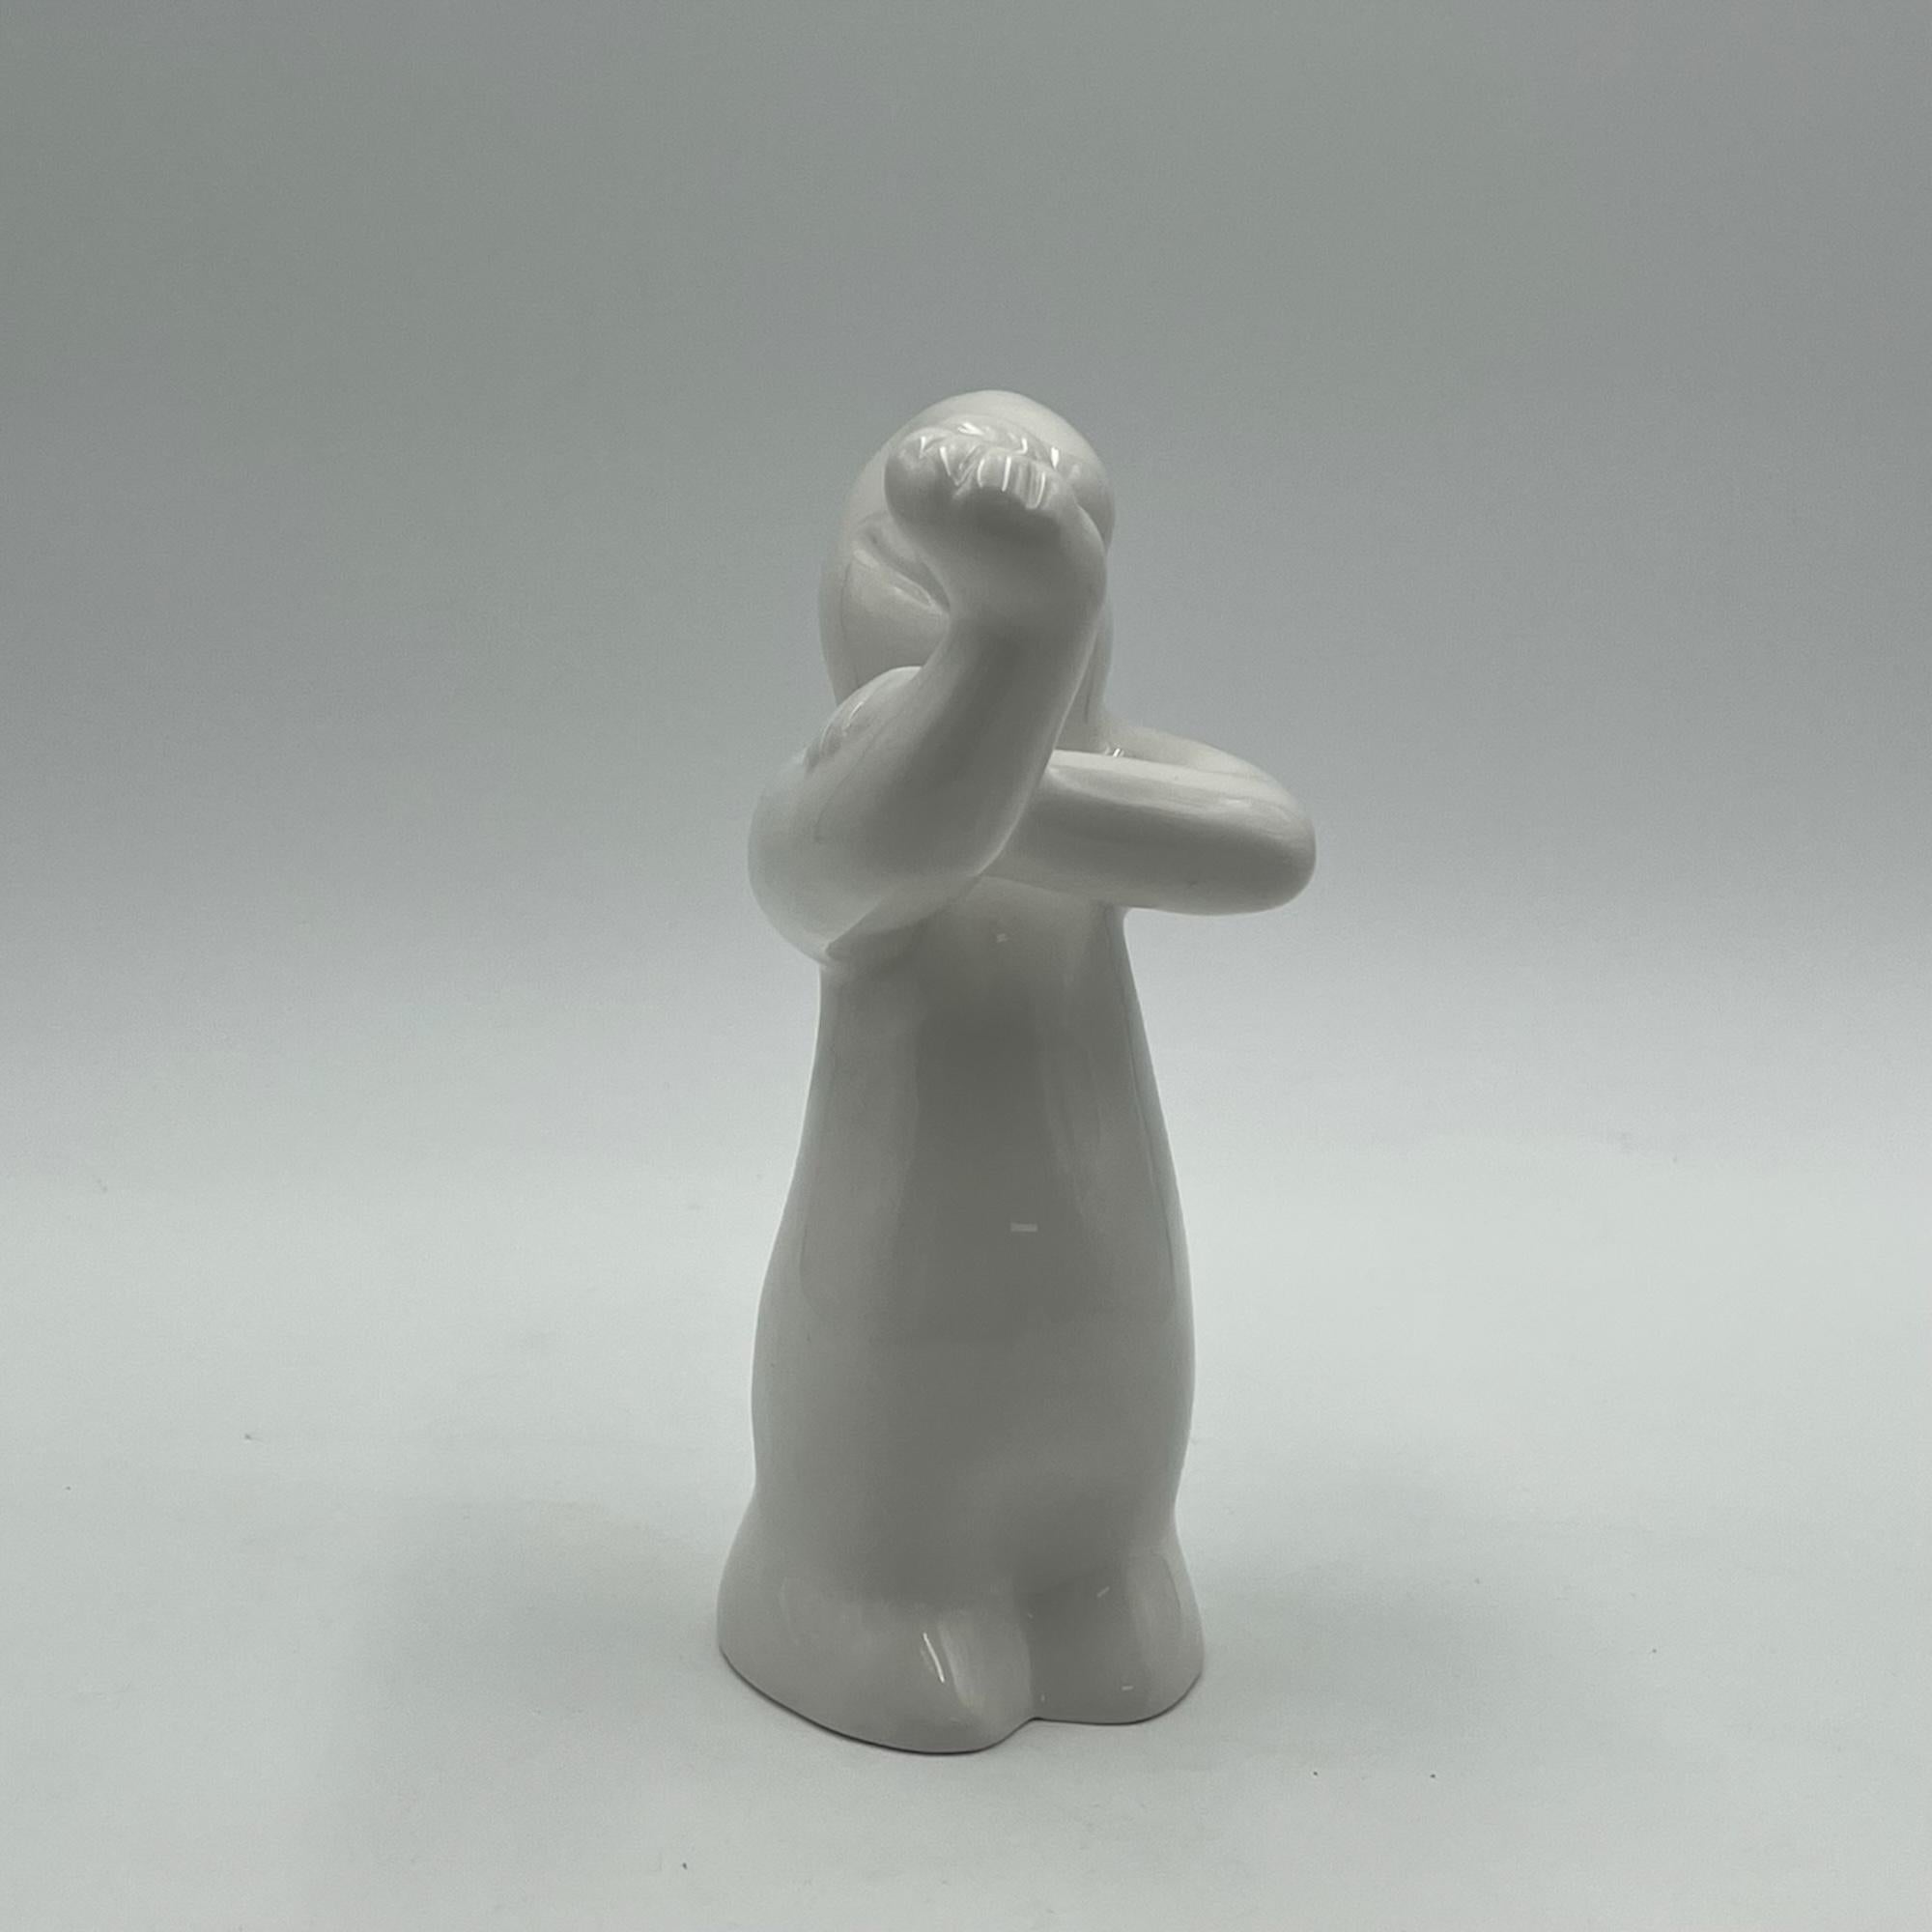 La Linea ‘Finger’ Osvaldo Cavandoli - Vintage Ceramic Figurine from the 60s 2